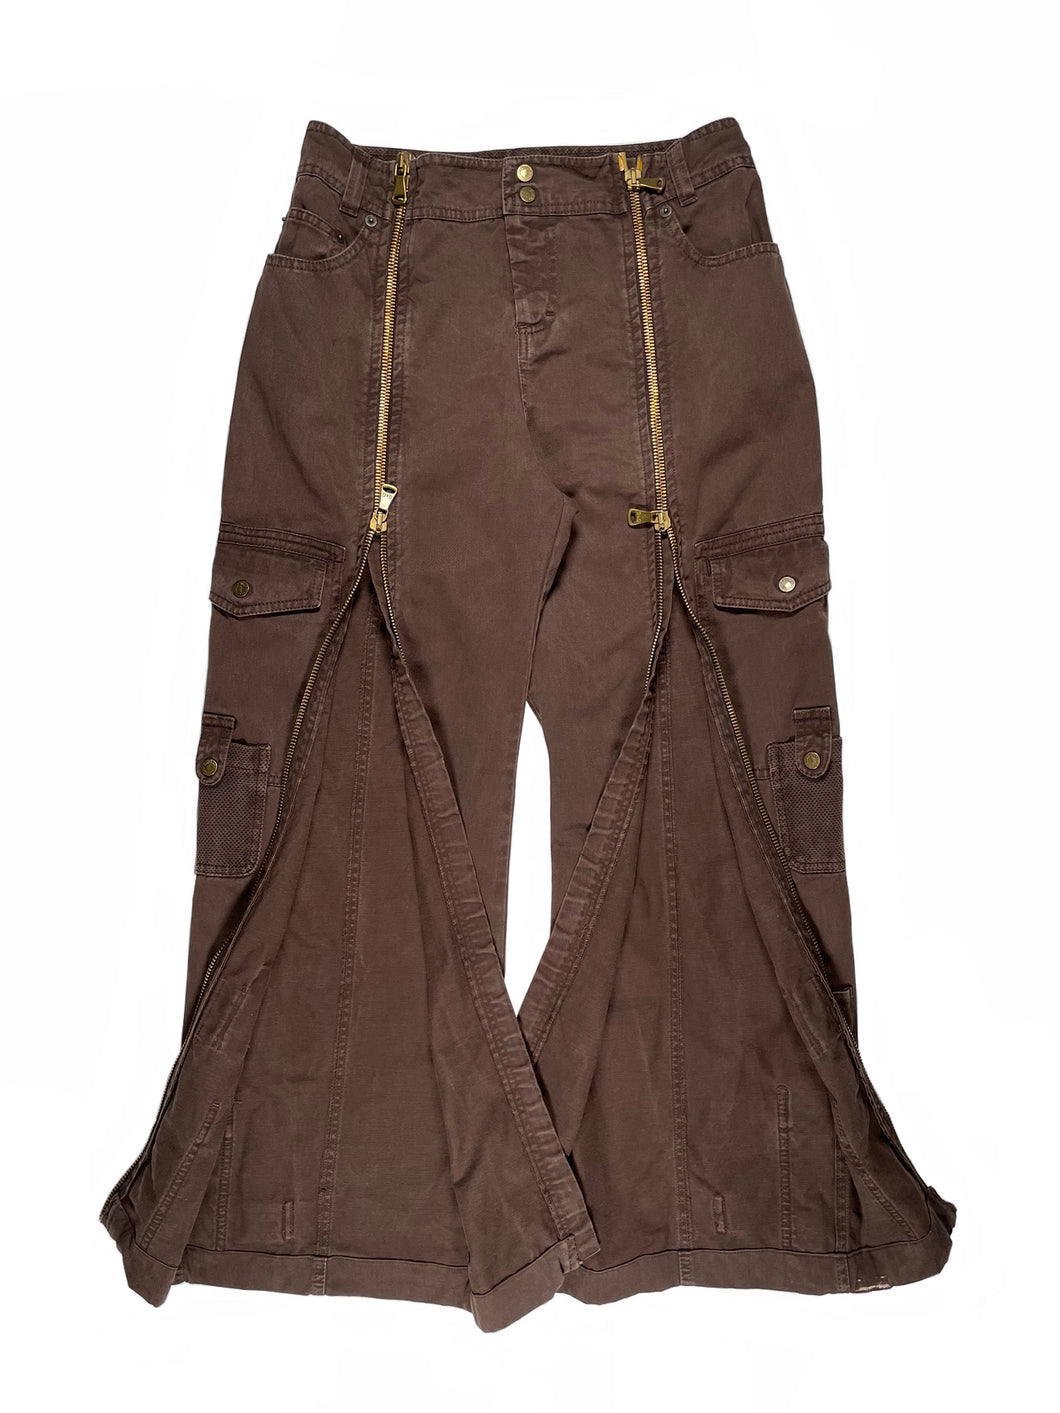 2004 Dolce & Gabbana full zipper cargo pants